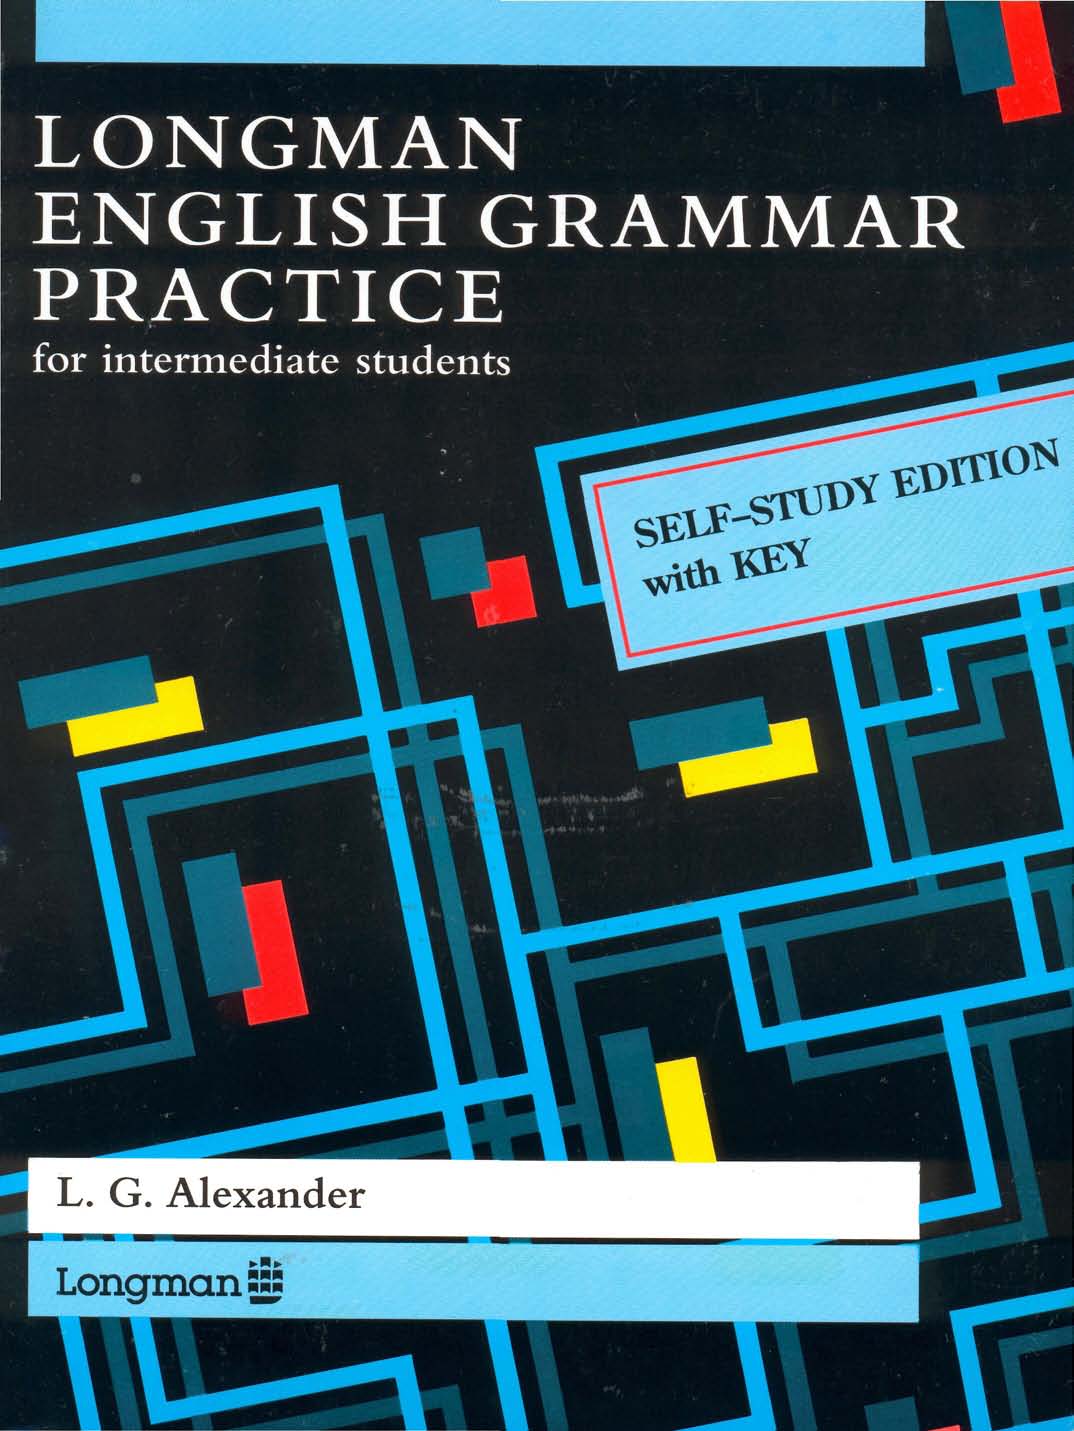 Study   Longman English Grammar Practice intermediate  (Self Study Edition)_Page_001.jpg